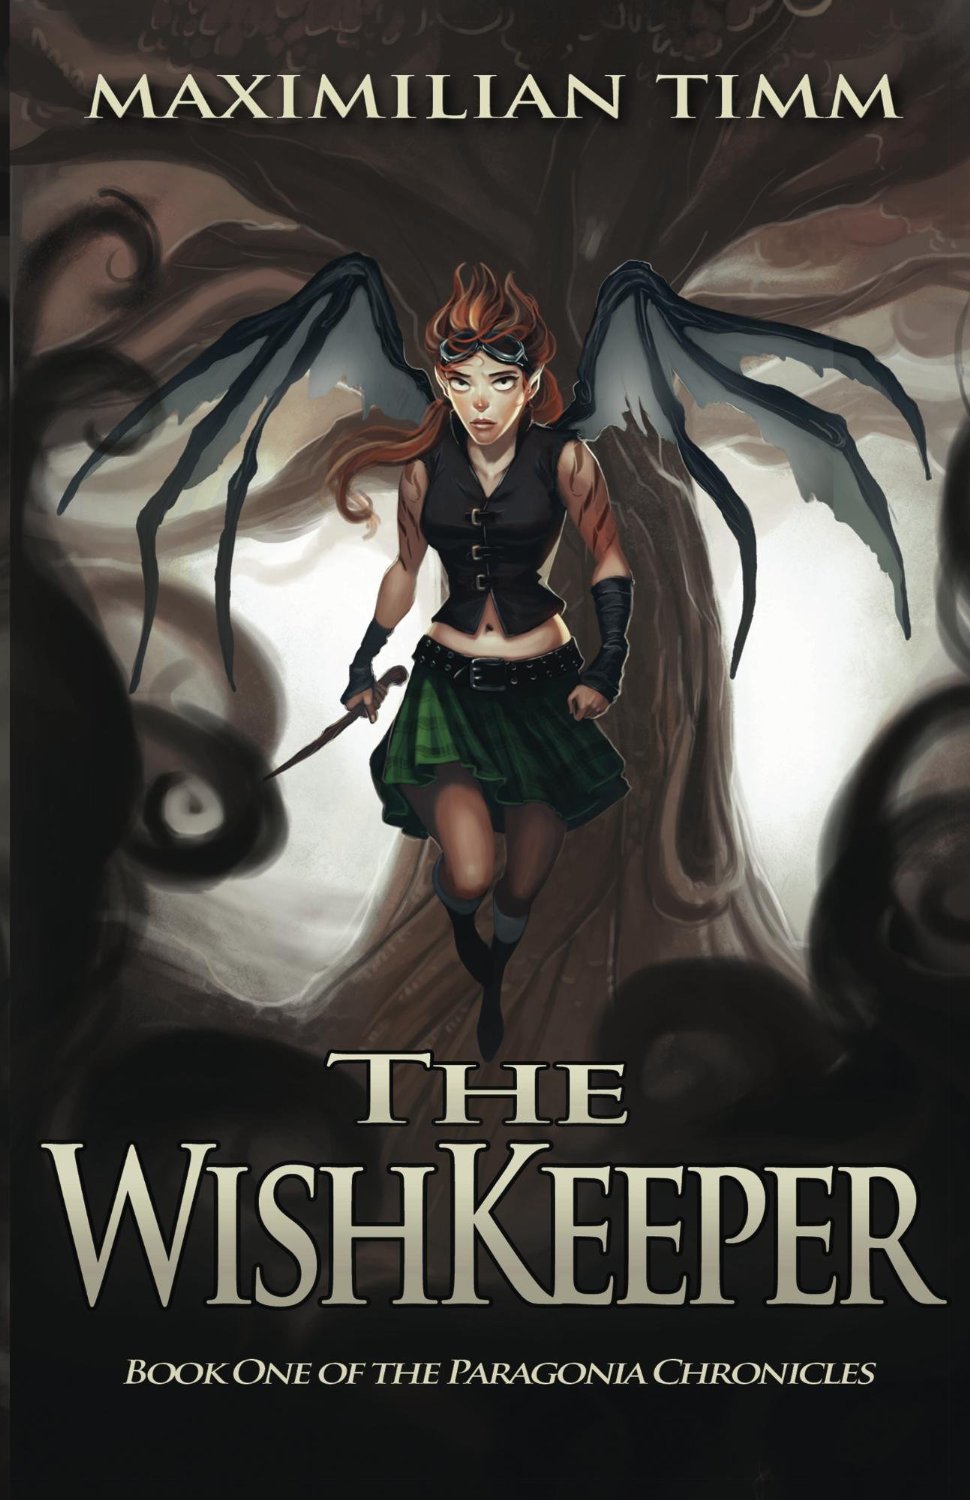 The Wishkeeper by Maximilian Timm